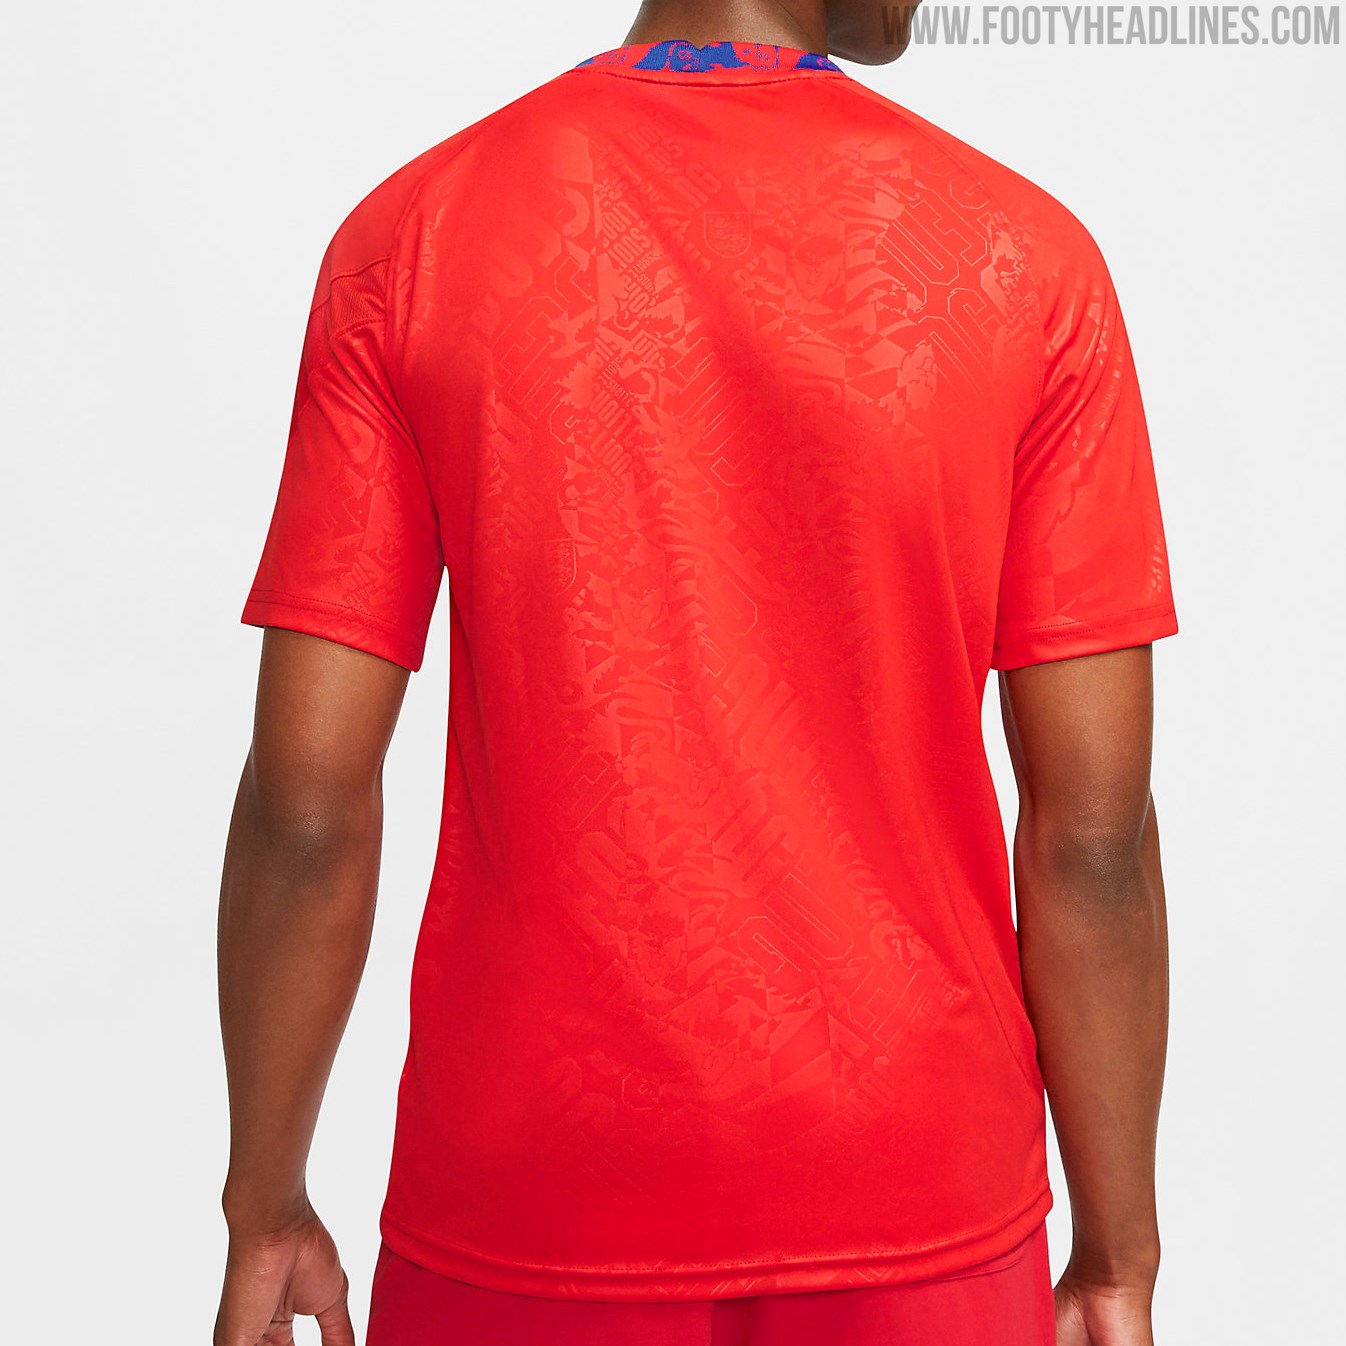 Nike England Euro 2020 Pre-Match Shirt Released - Footy Headlines